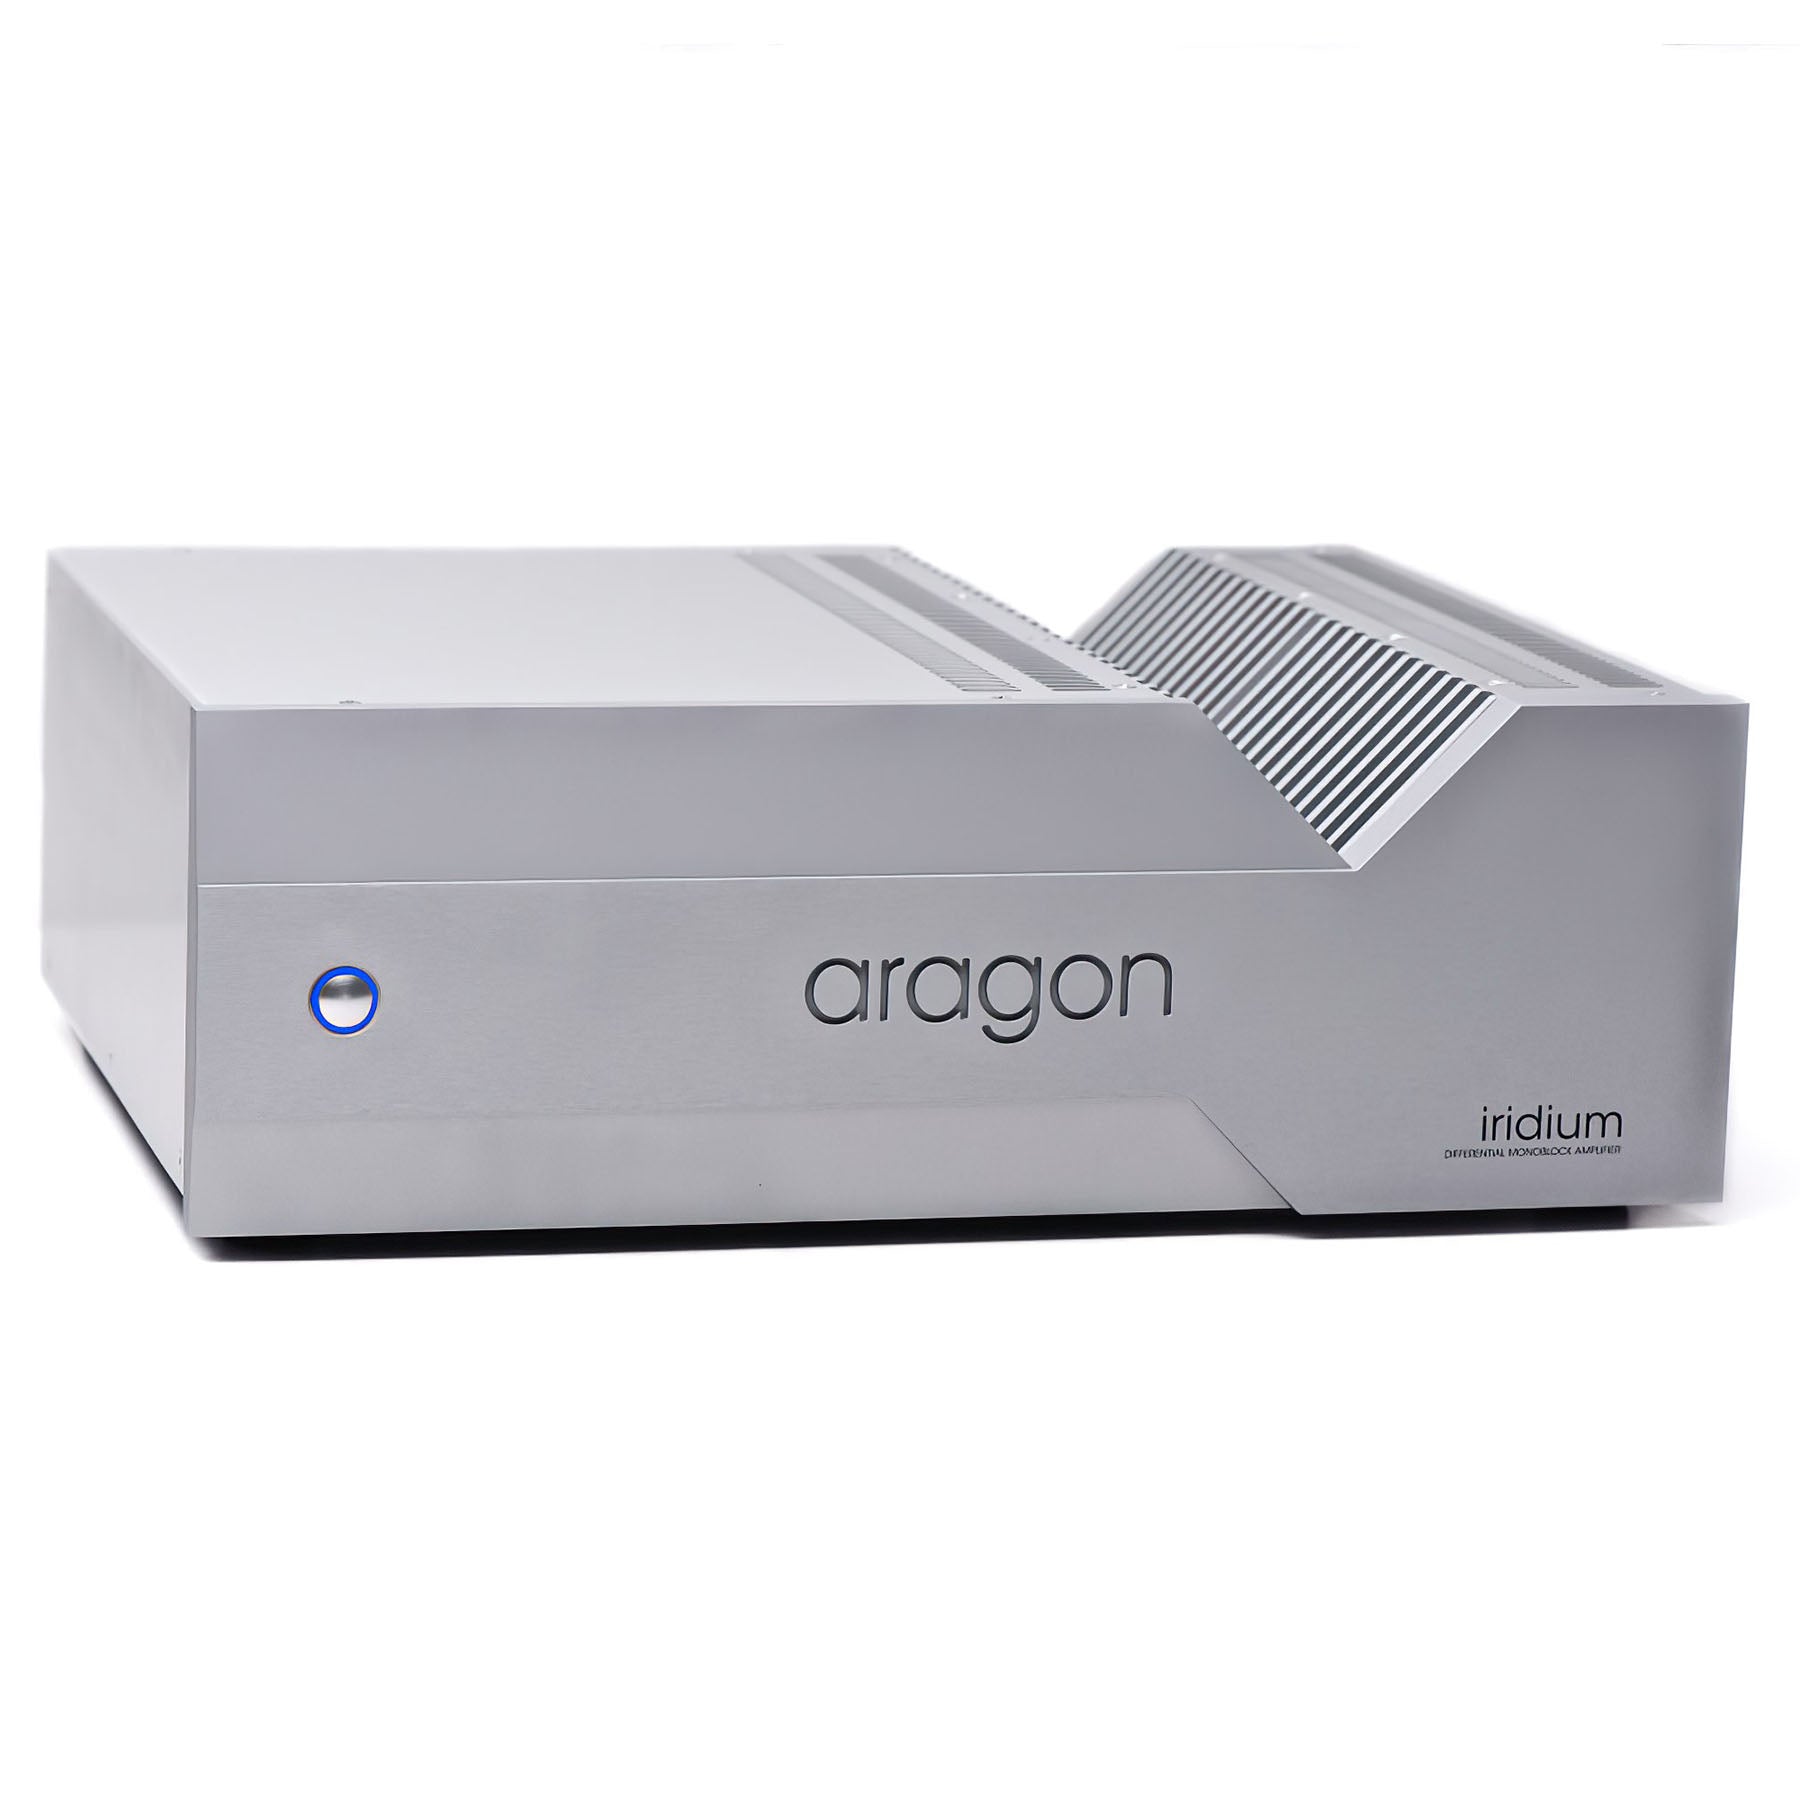 Aragon Iridium 400W Monoblock Amplifier